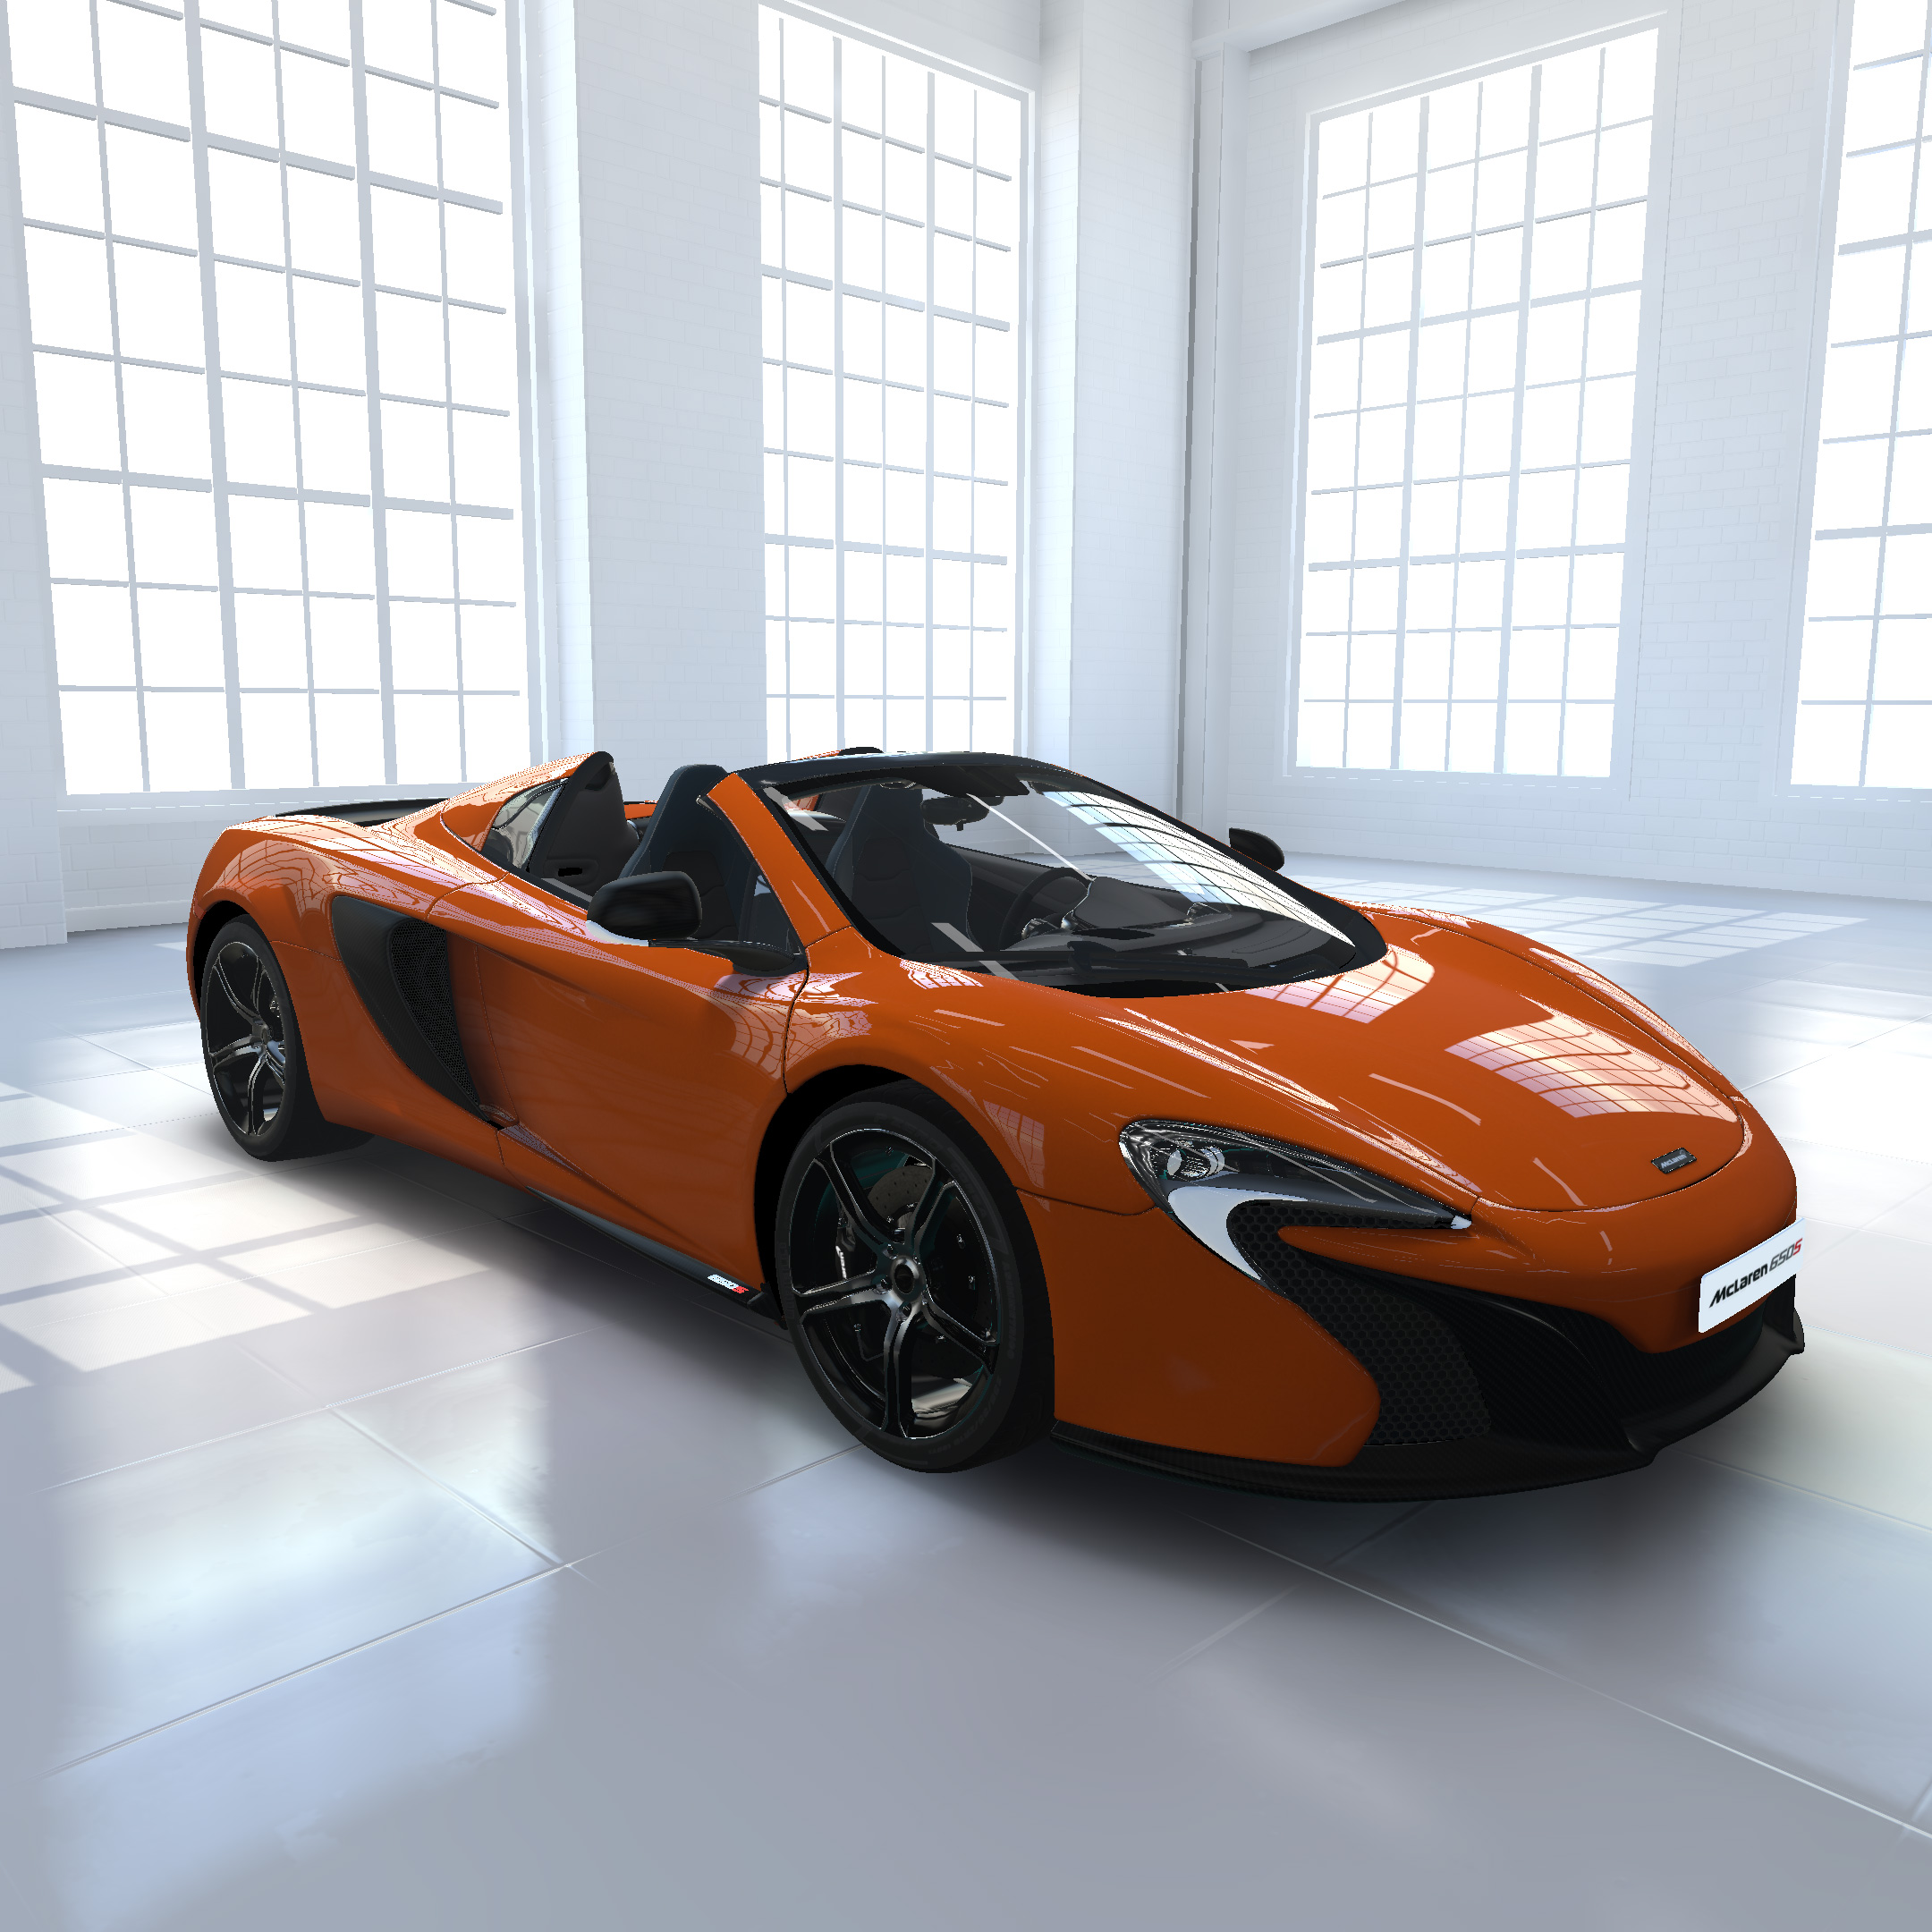 McLaren AR / VR Experience